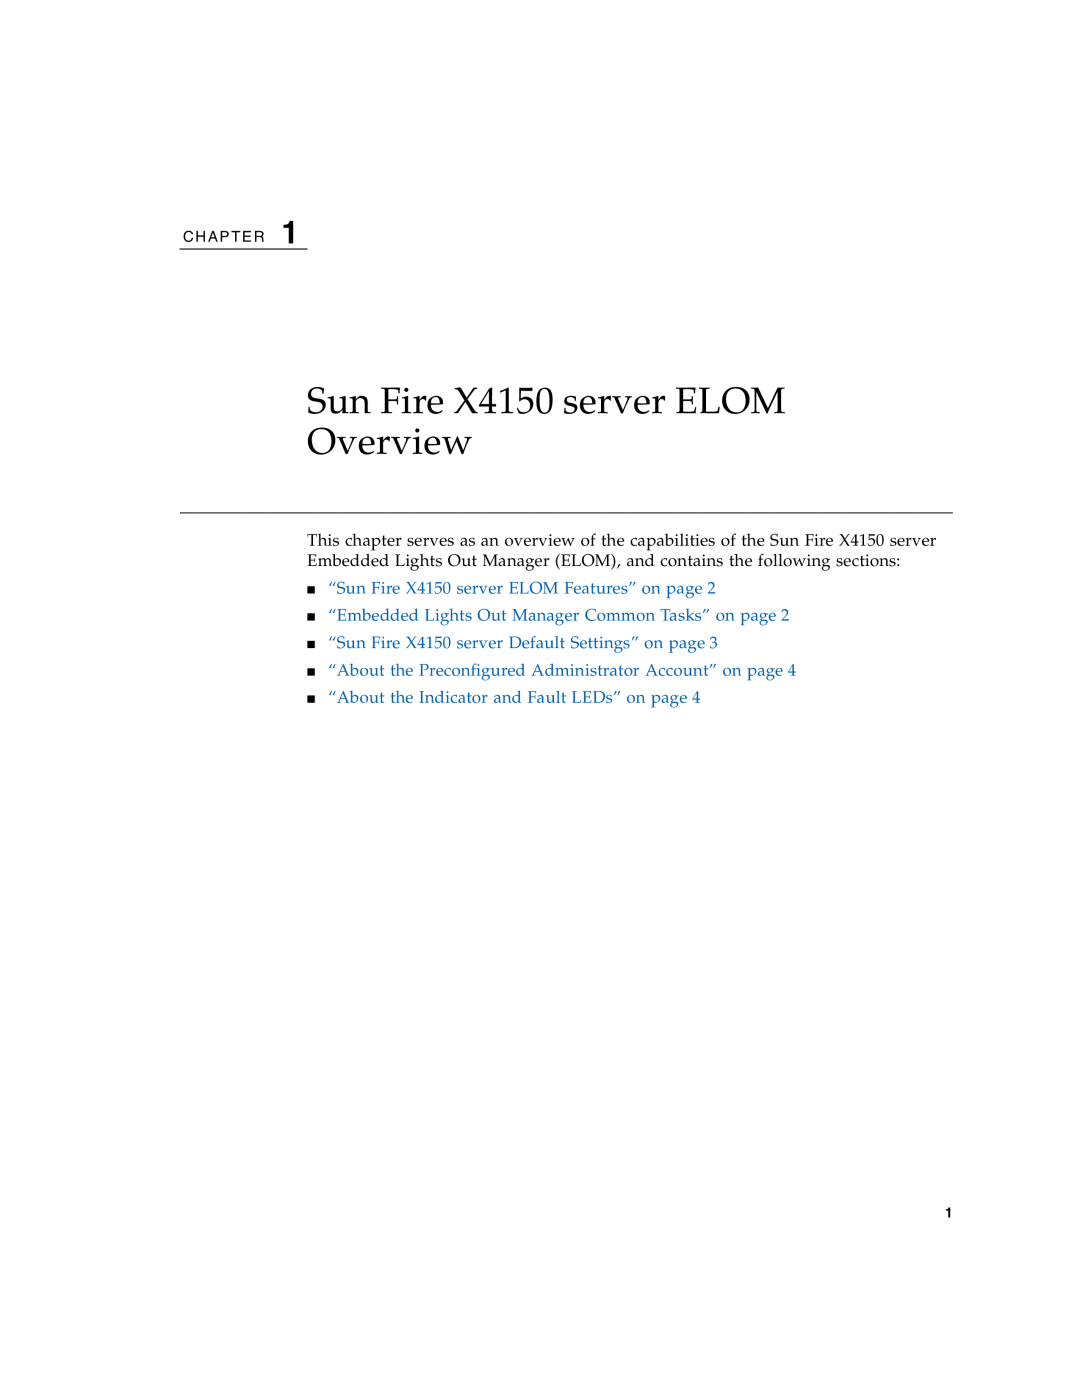 Sun Microsystems manual Sun Fire X4150 server ELOM Overview, “Sun Fire X4150 server ELOM Features” on page 